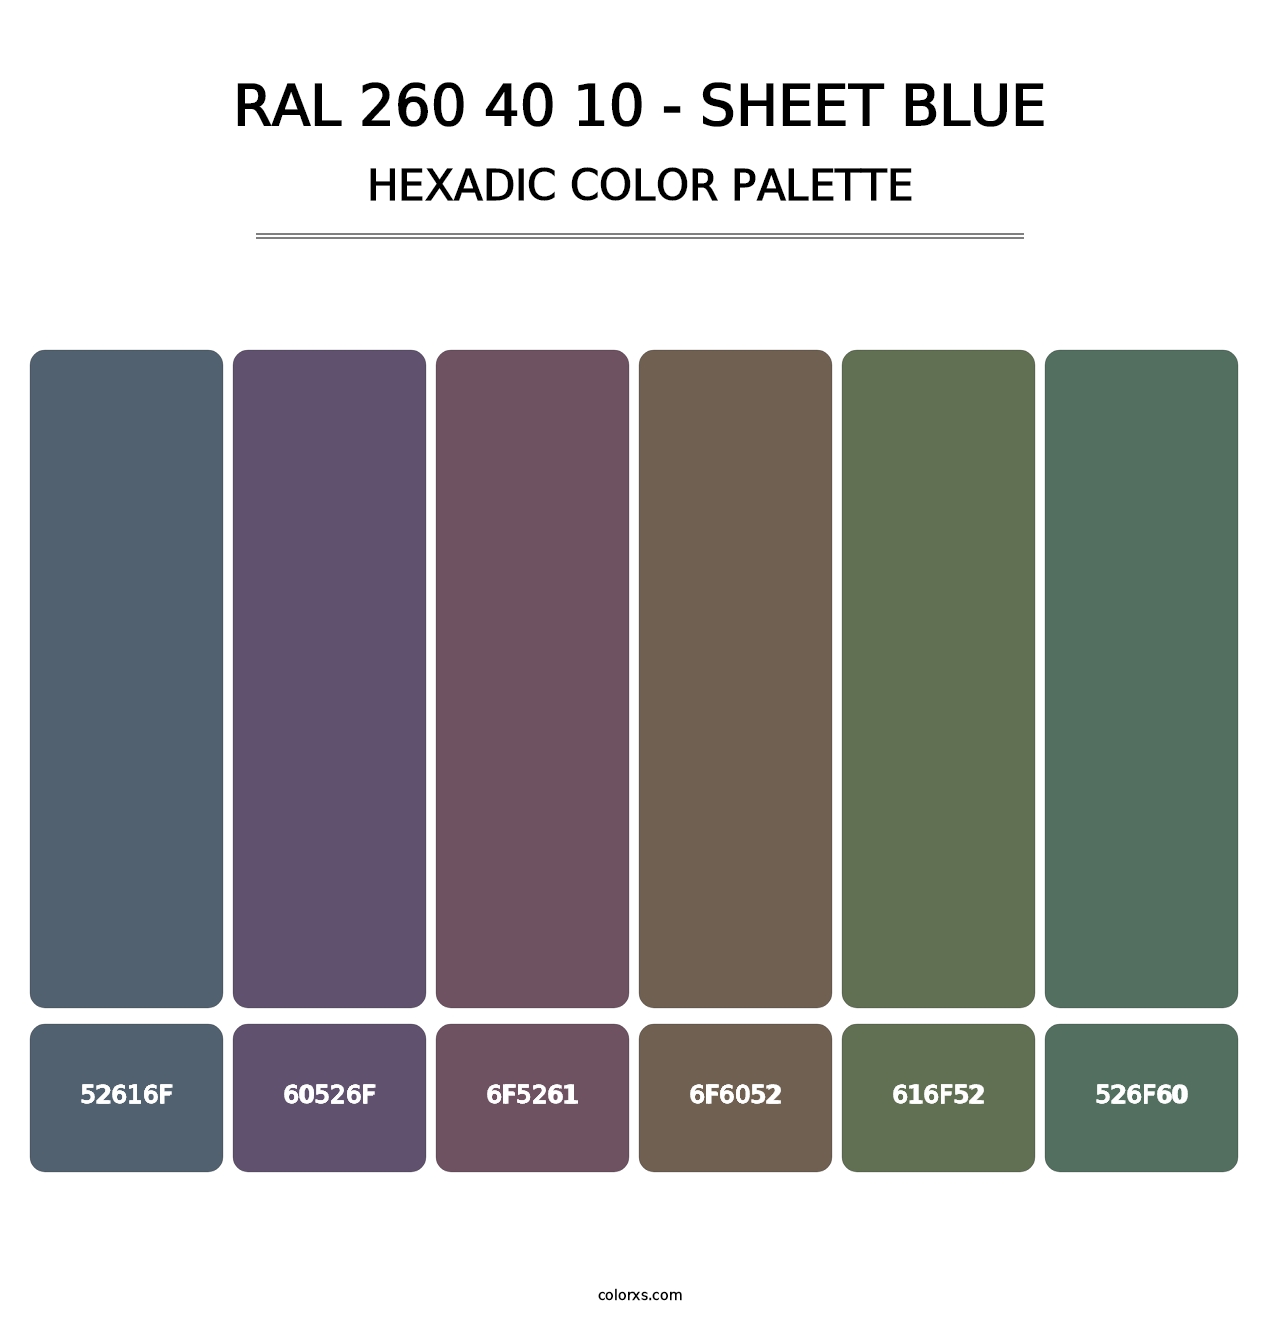 RAL 260 40 10 - Sheet Blue - Hexadic Color Palette